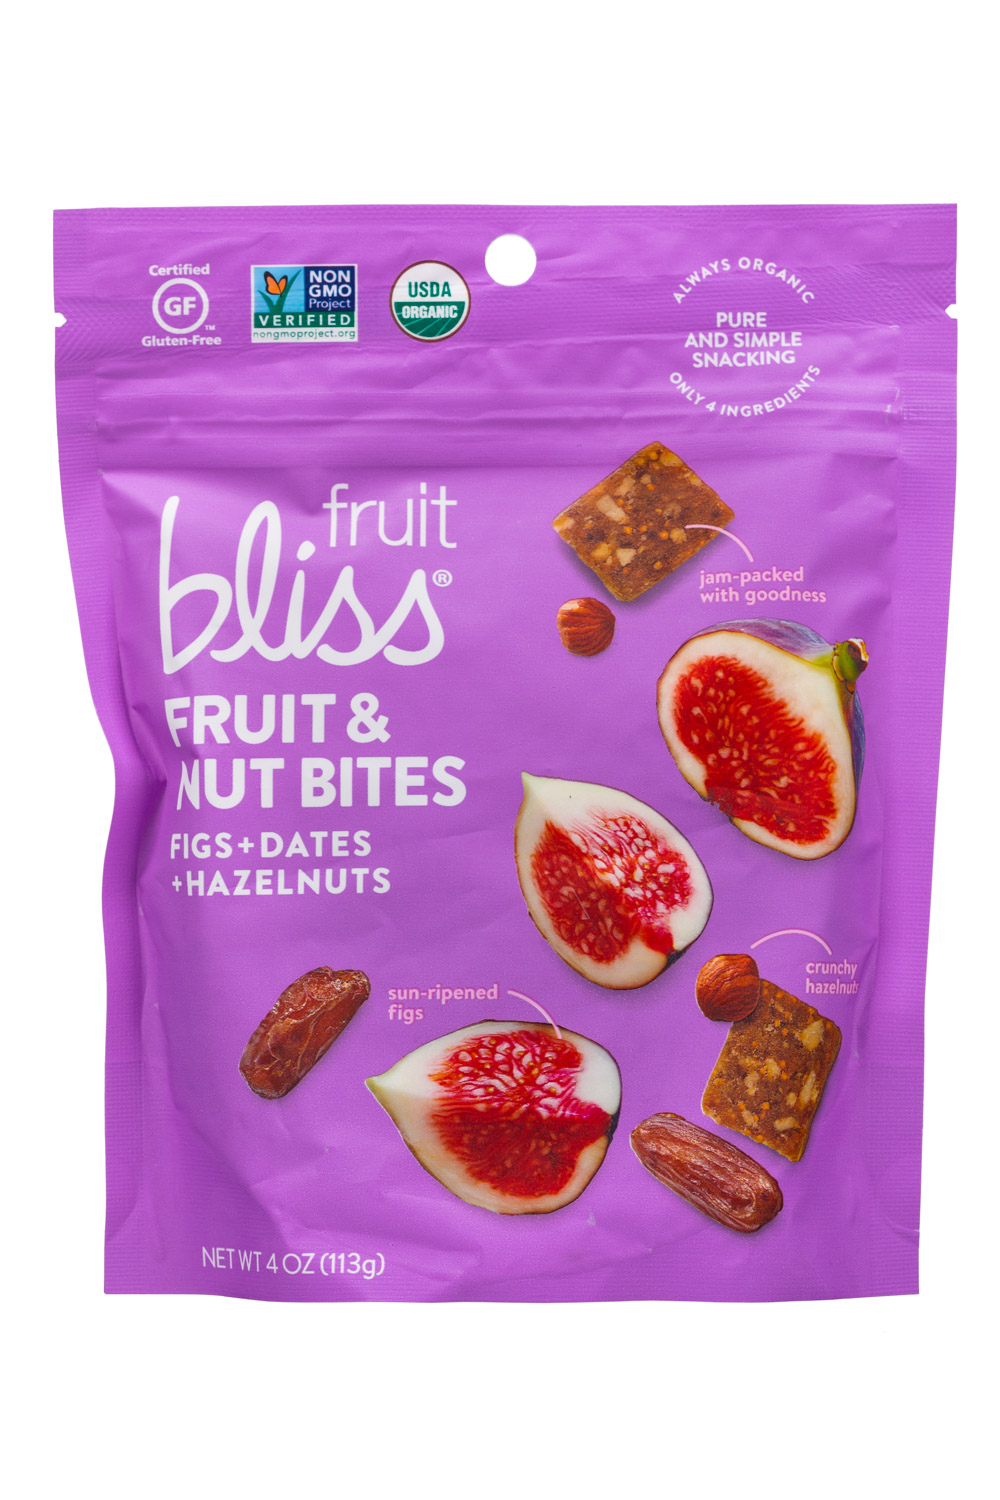 Figs + Dates + HAzelnuts